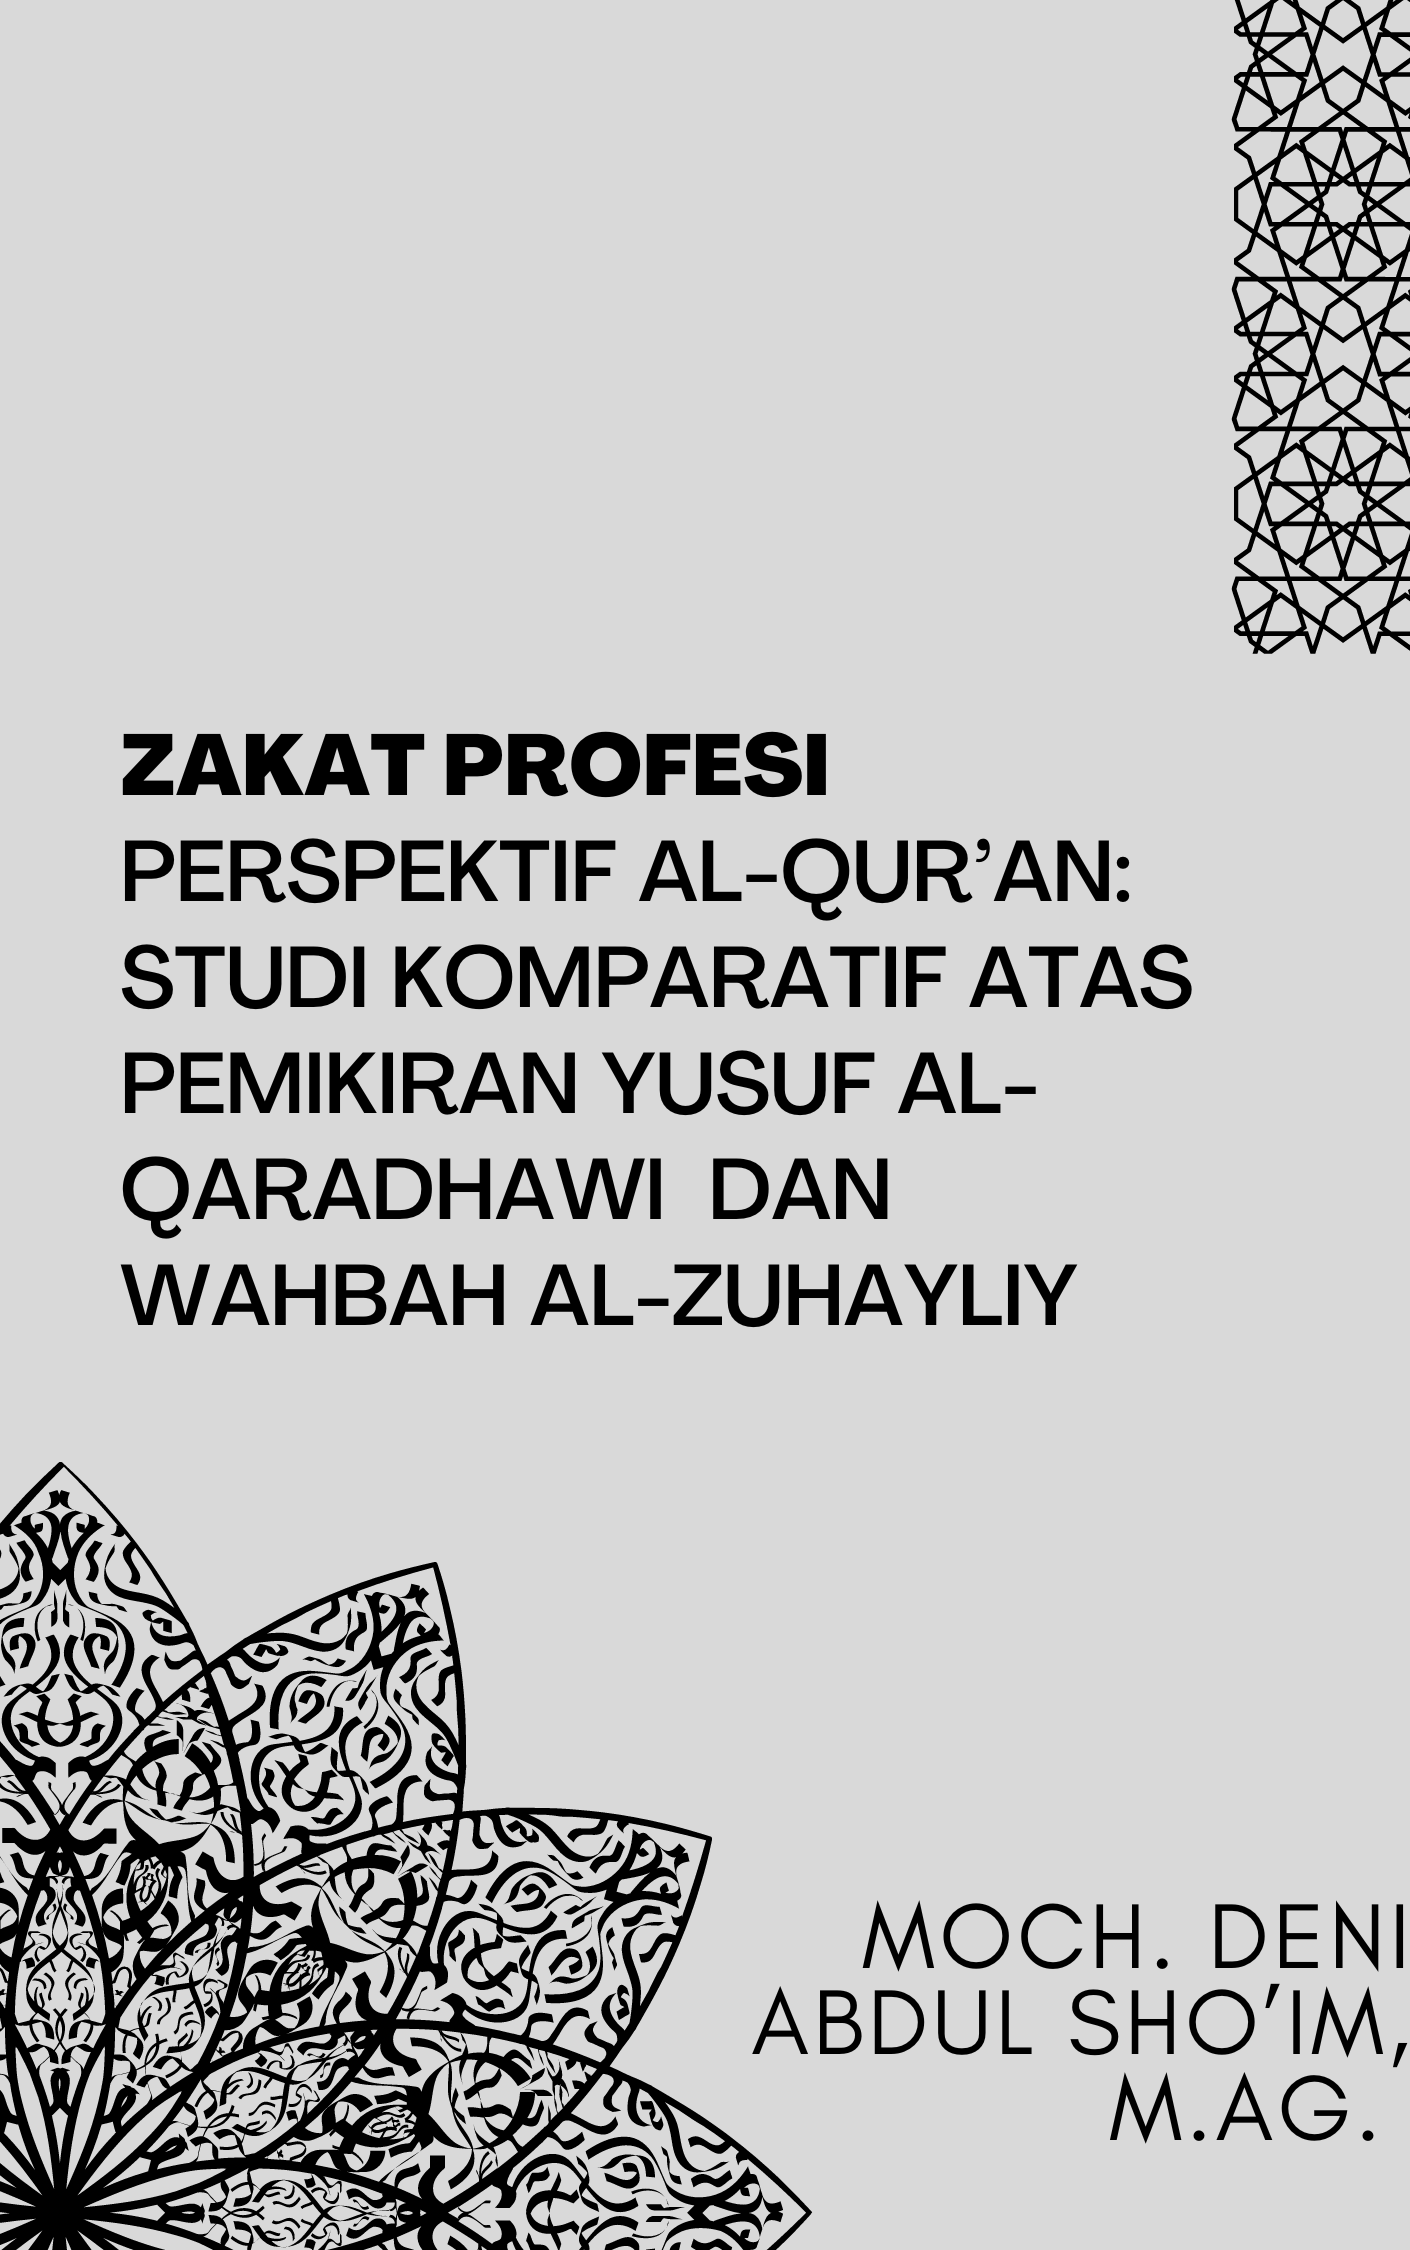 Zakat Profesi Perspektif Al-Qur’an Studi Komparatif Atas Pemikiran Yusuf Al-Qaradhawi Dan Wahbah Al-Zuhayliy